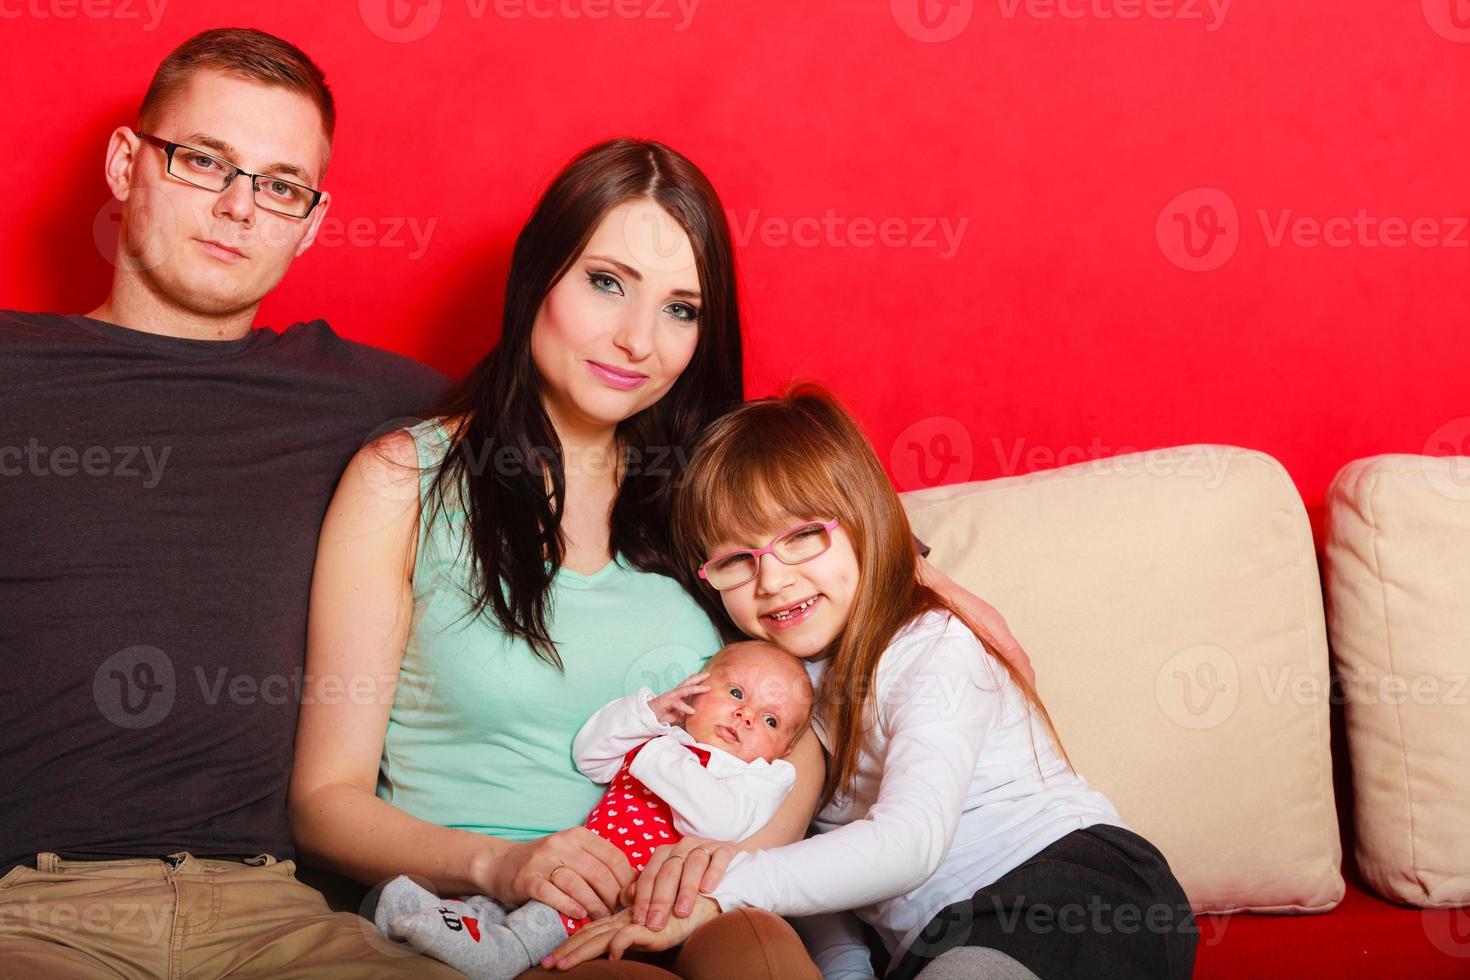 Family with newborn baby girl portrait photo